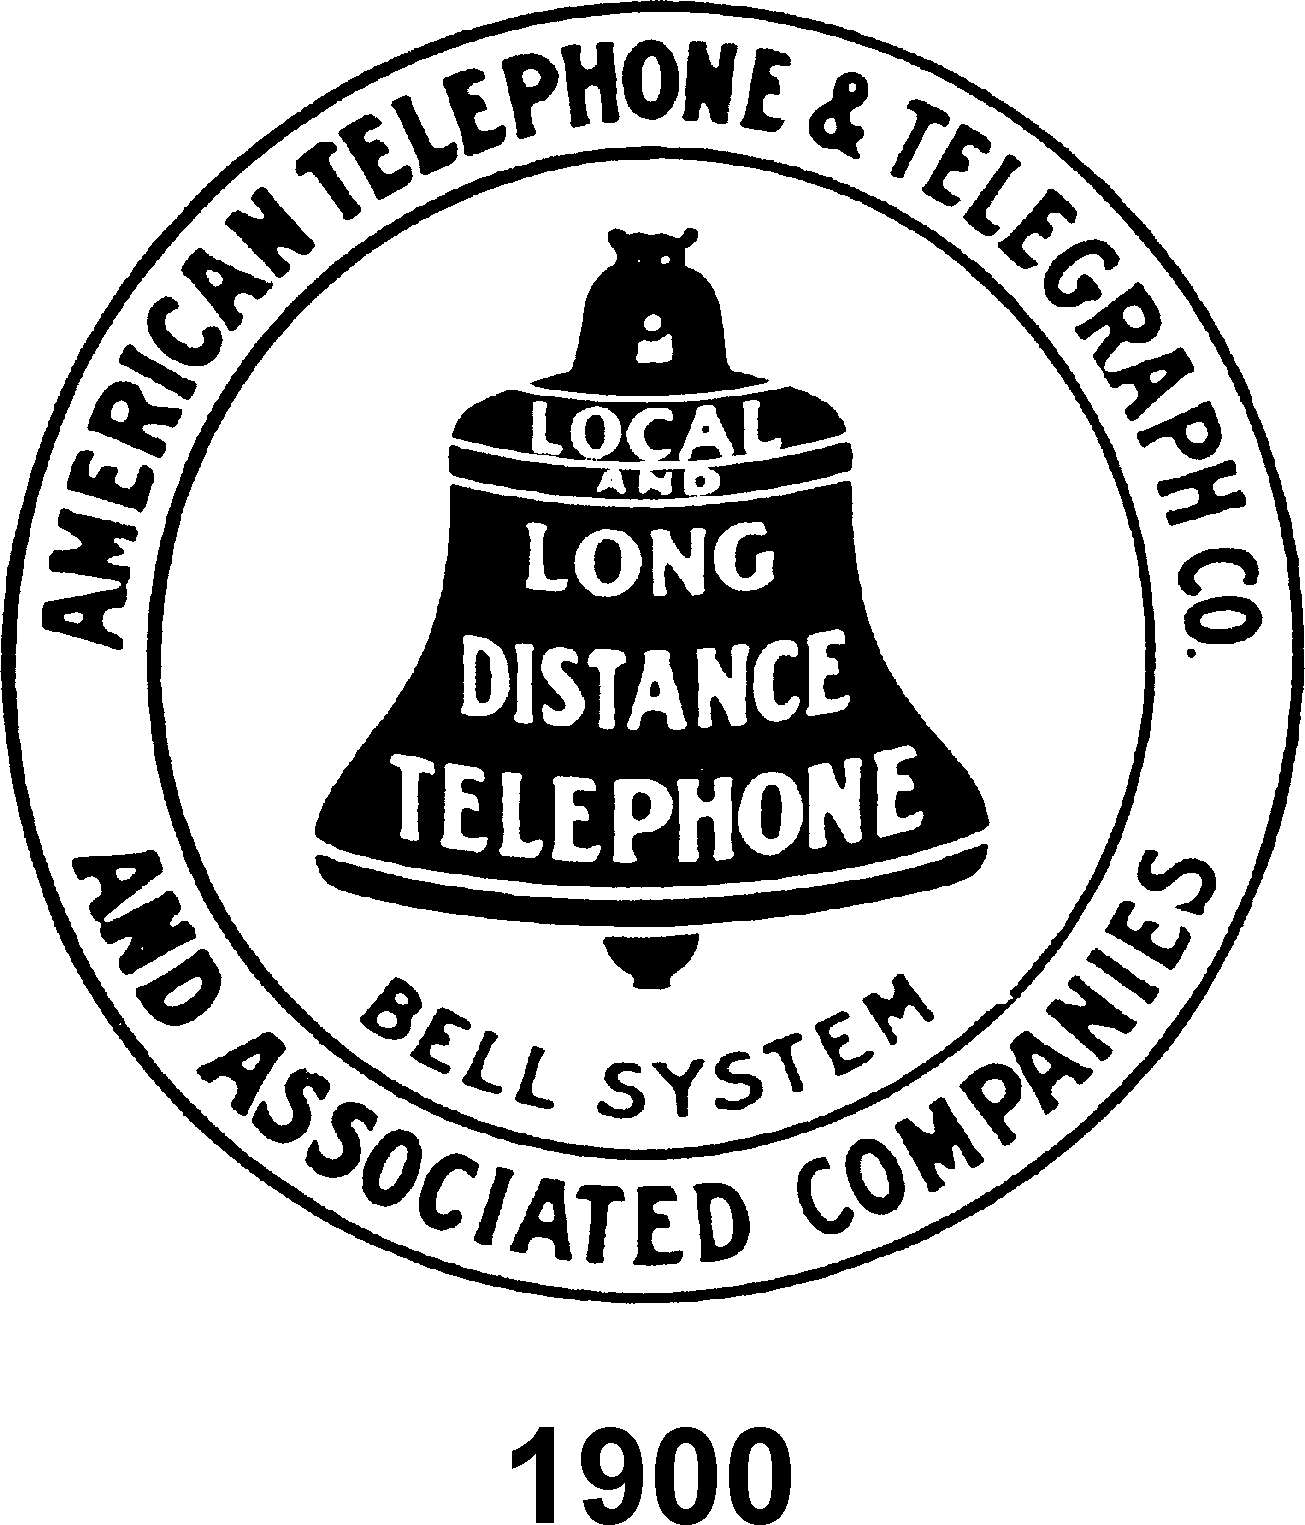 Old Telephone Logo - Bell System Memorial- Bell Logo History